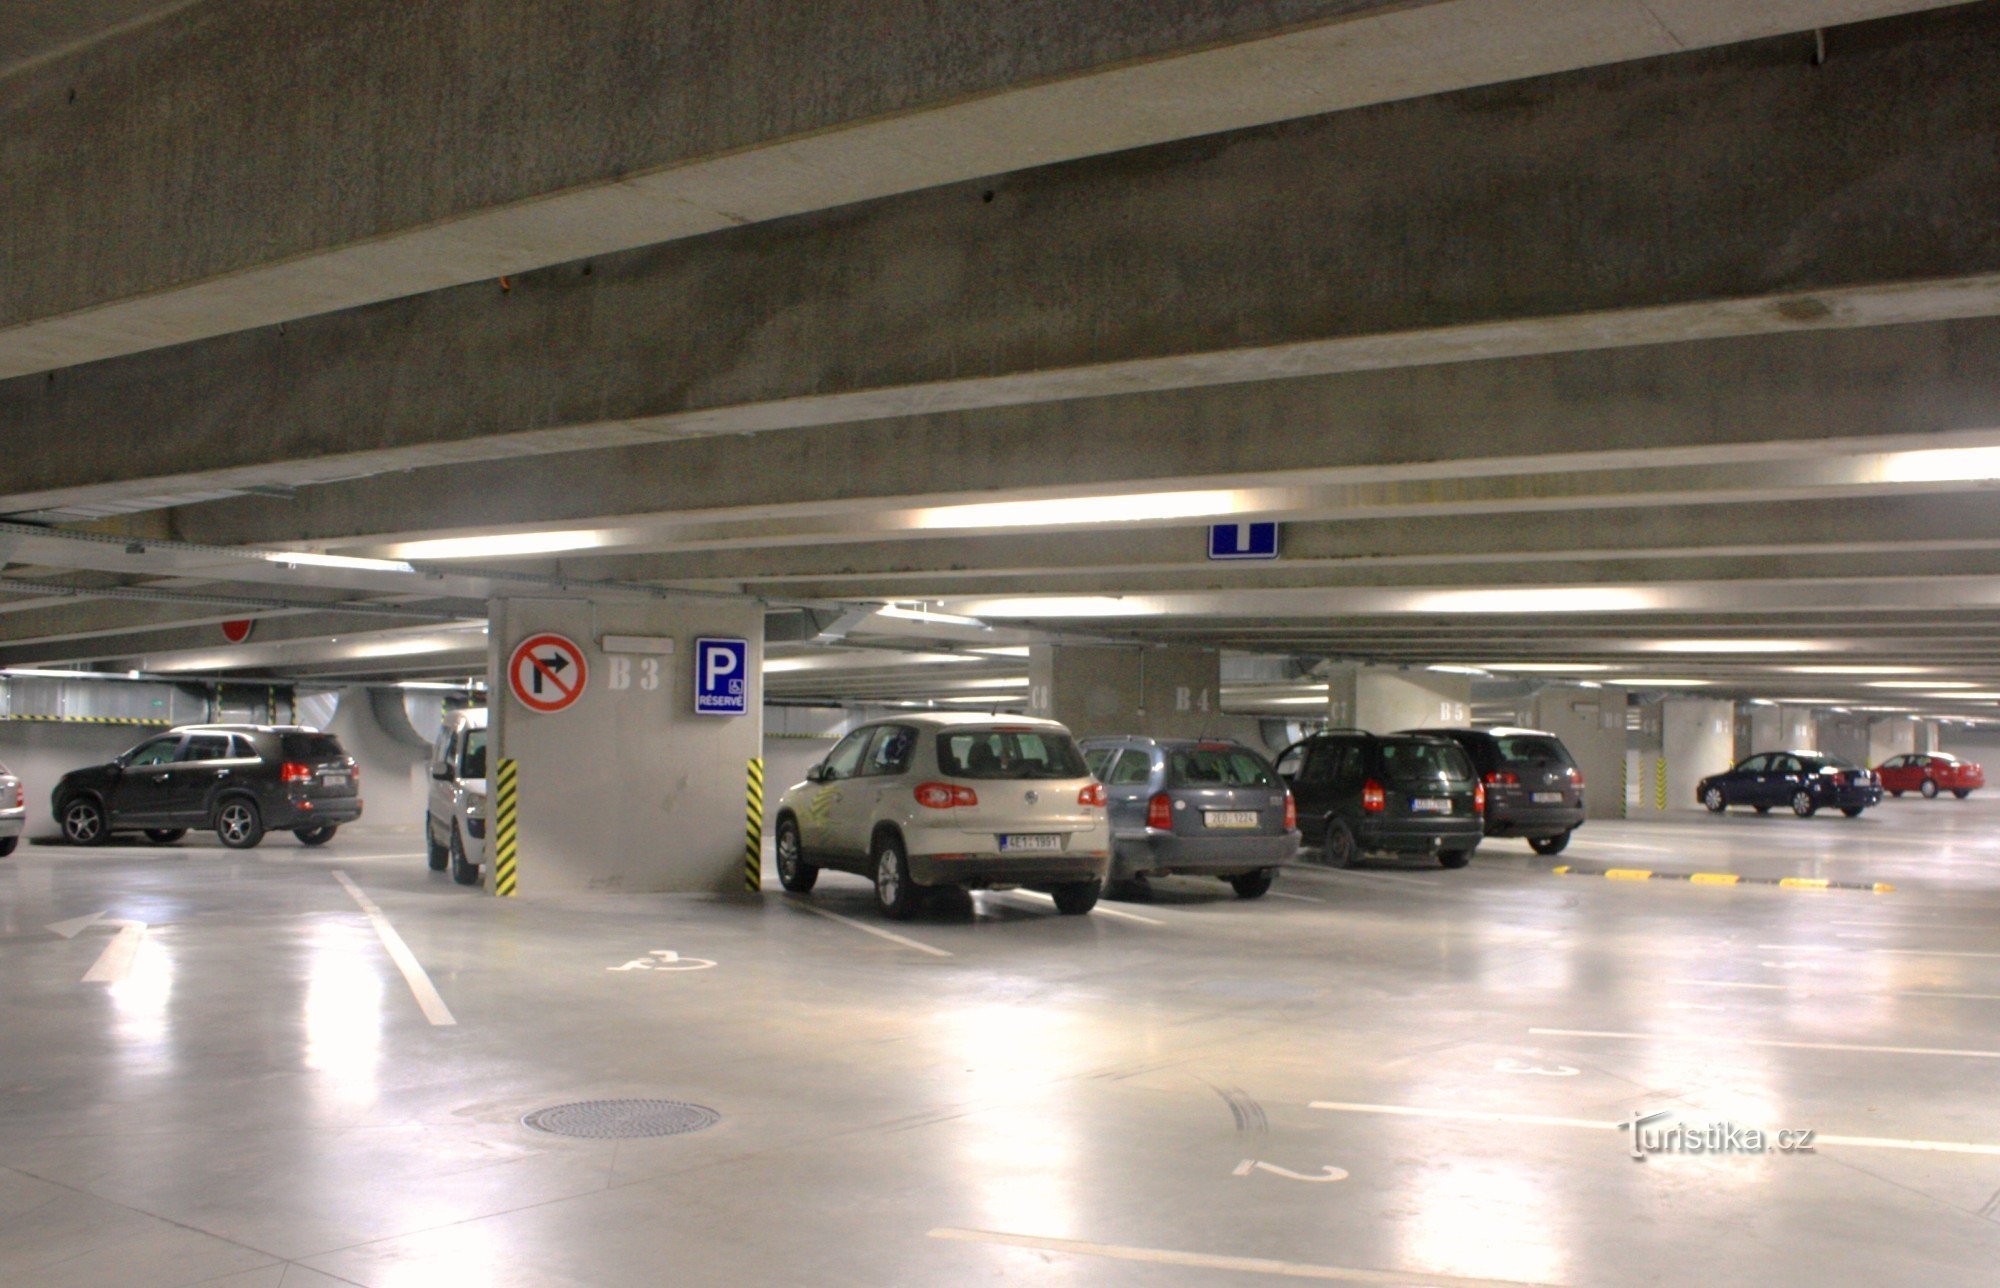 Underground parking of the transport terminal